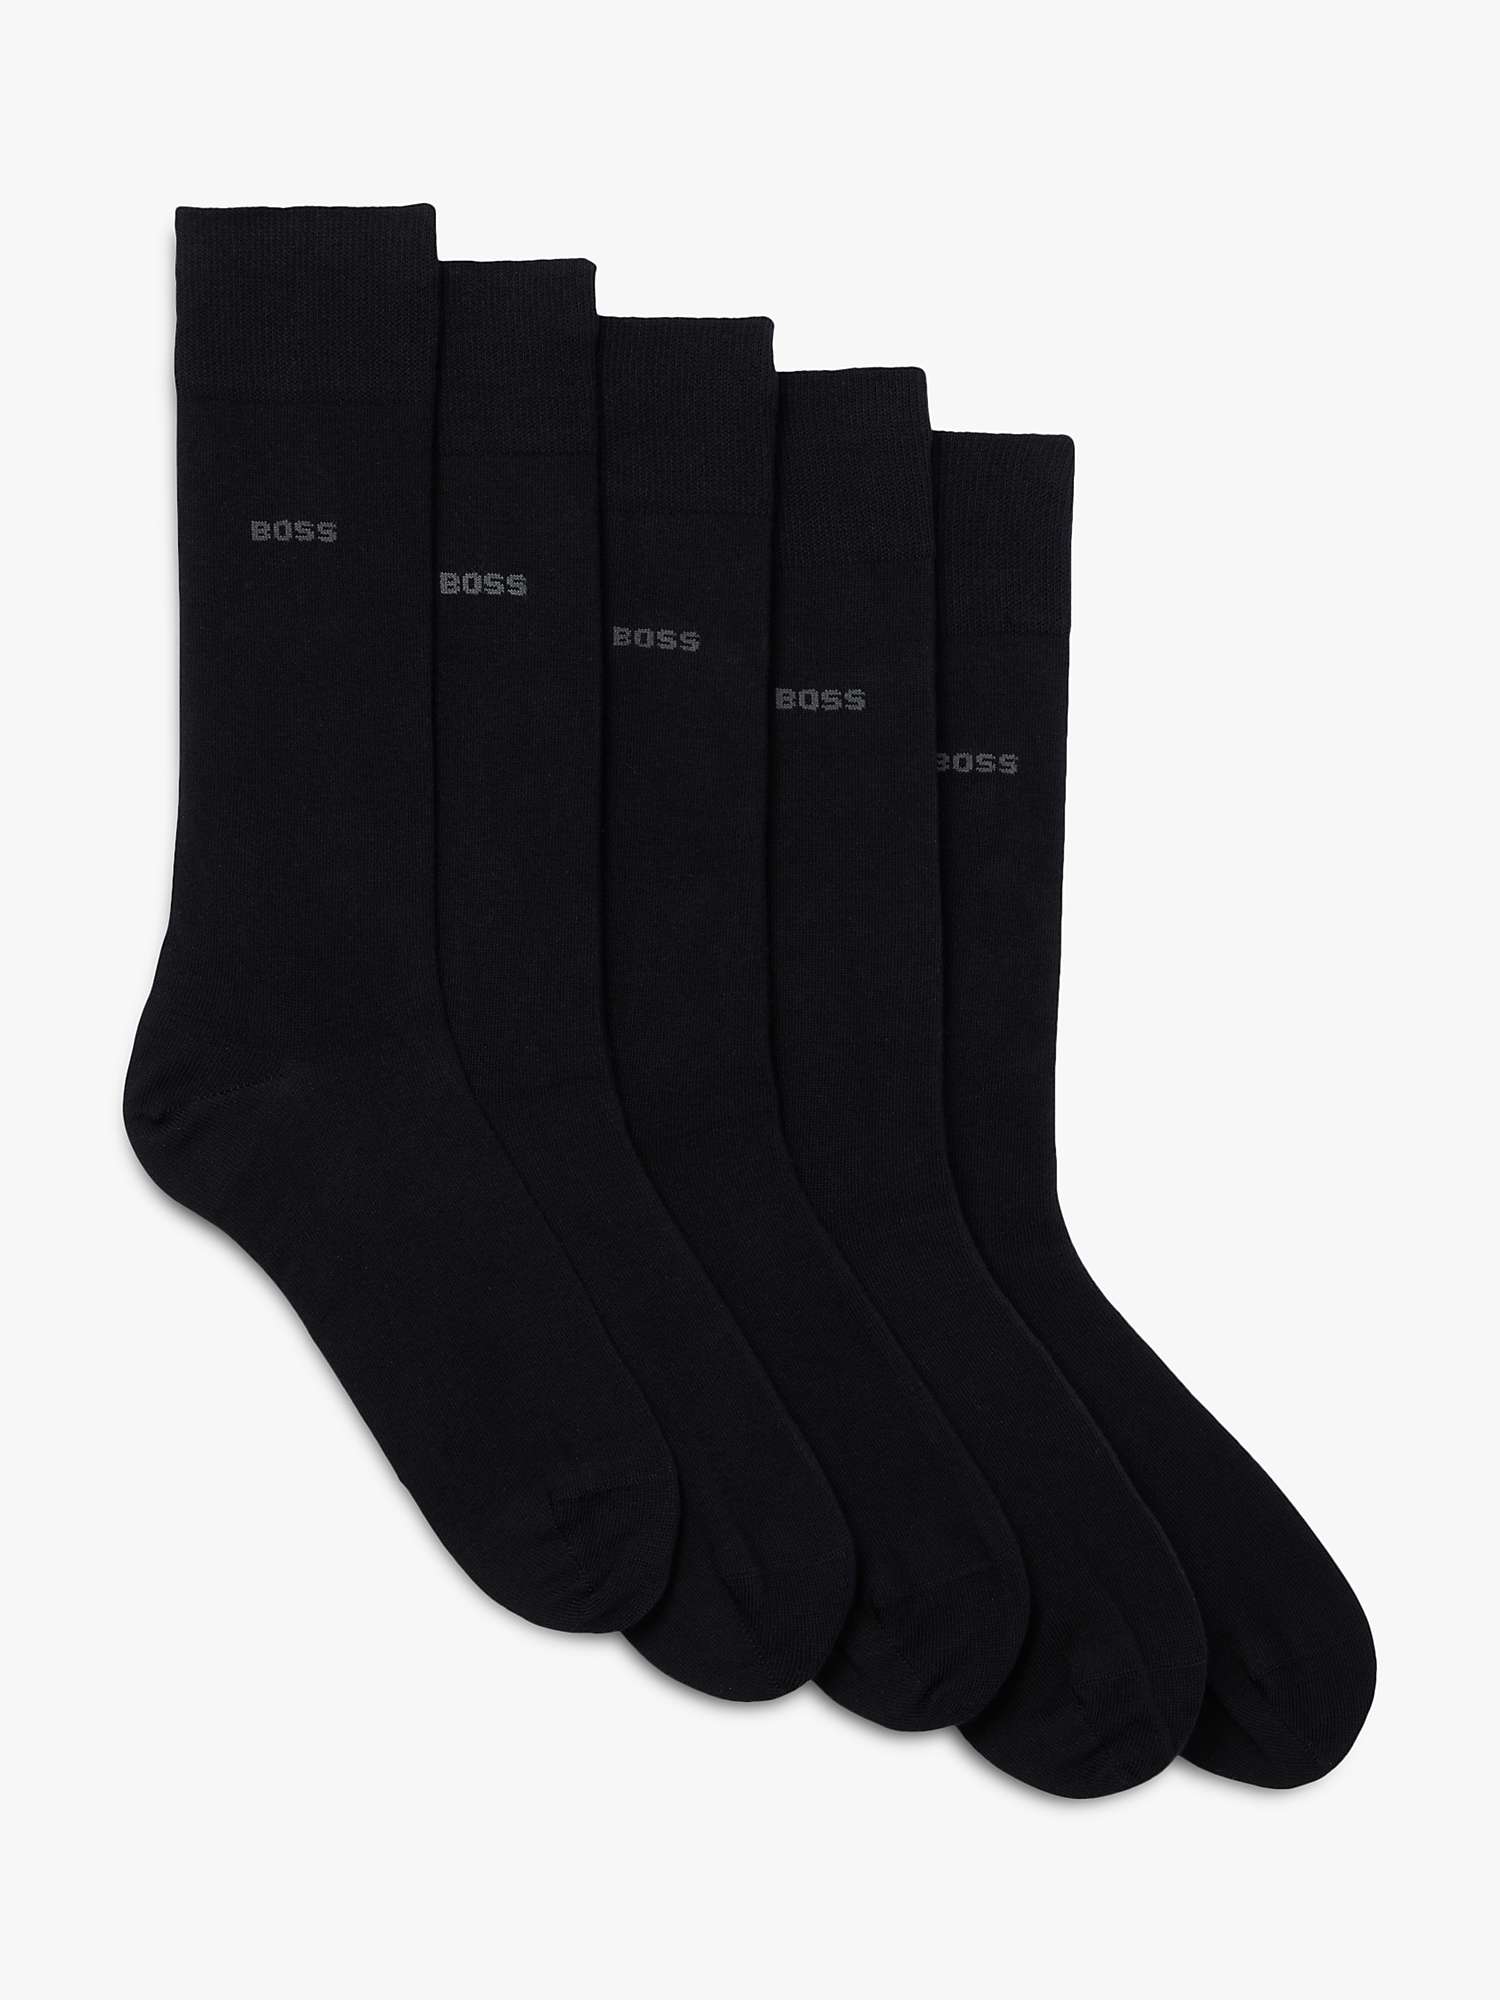 BOSS Cotton Blend Socks, Pack of 5, Black at John Lewis & Partners